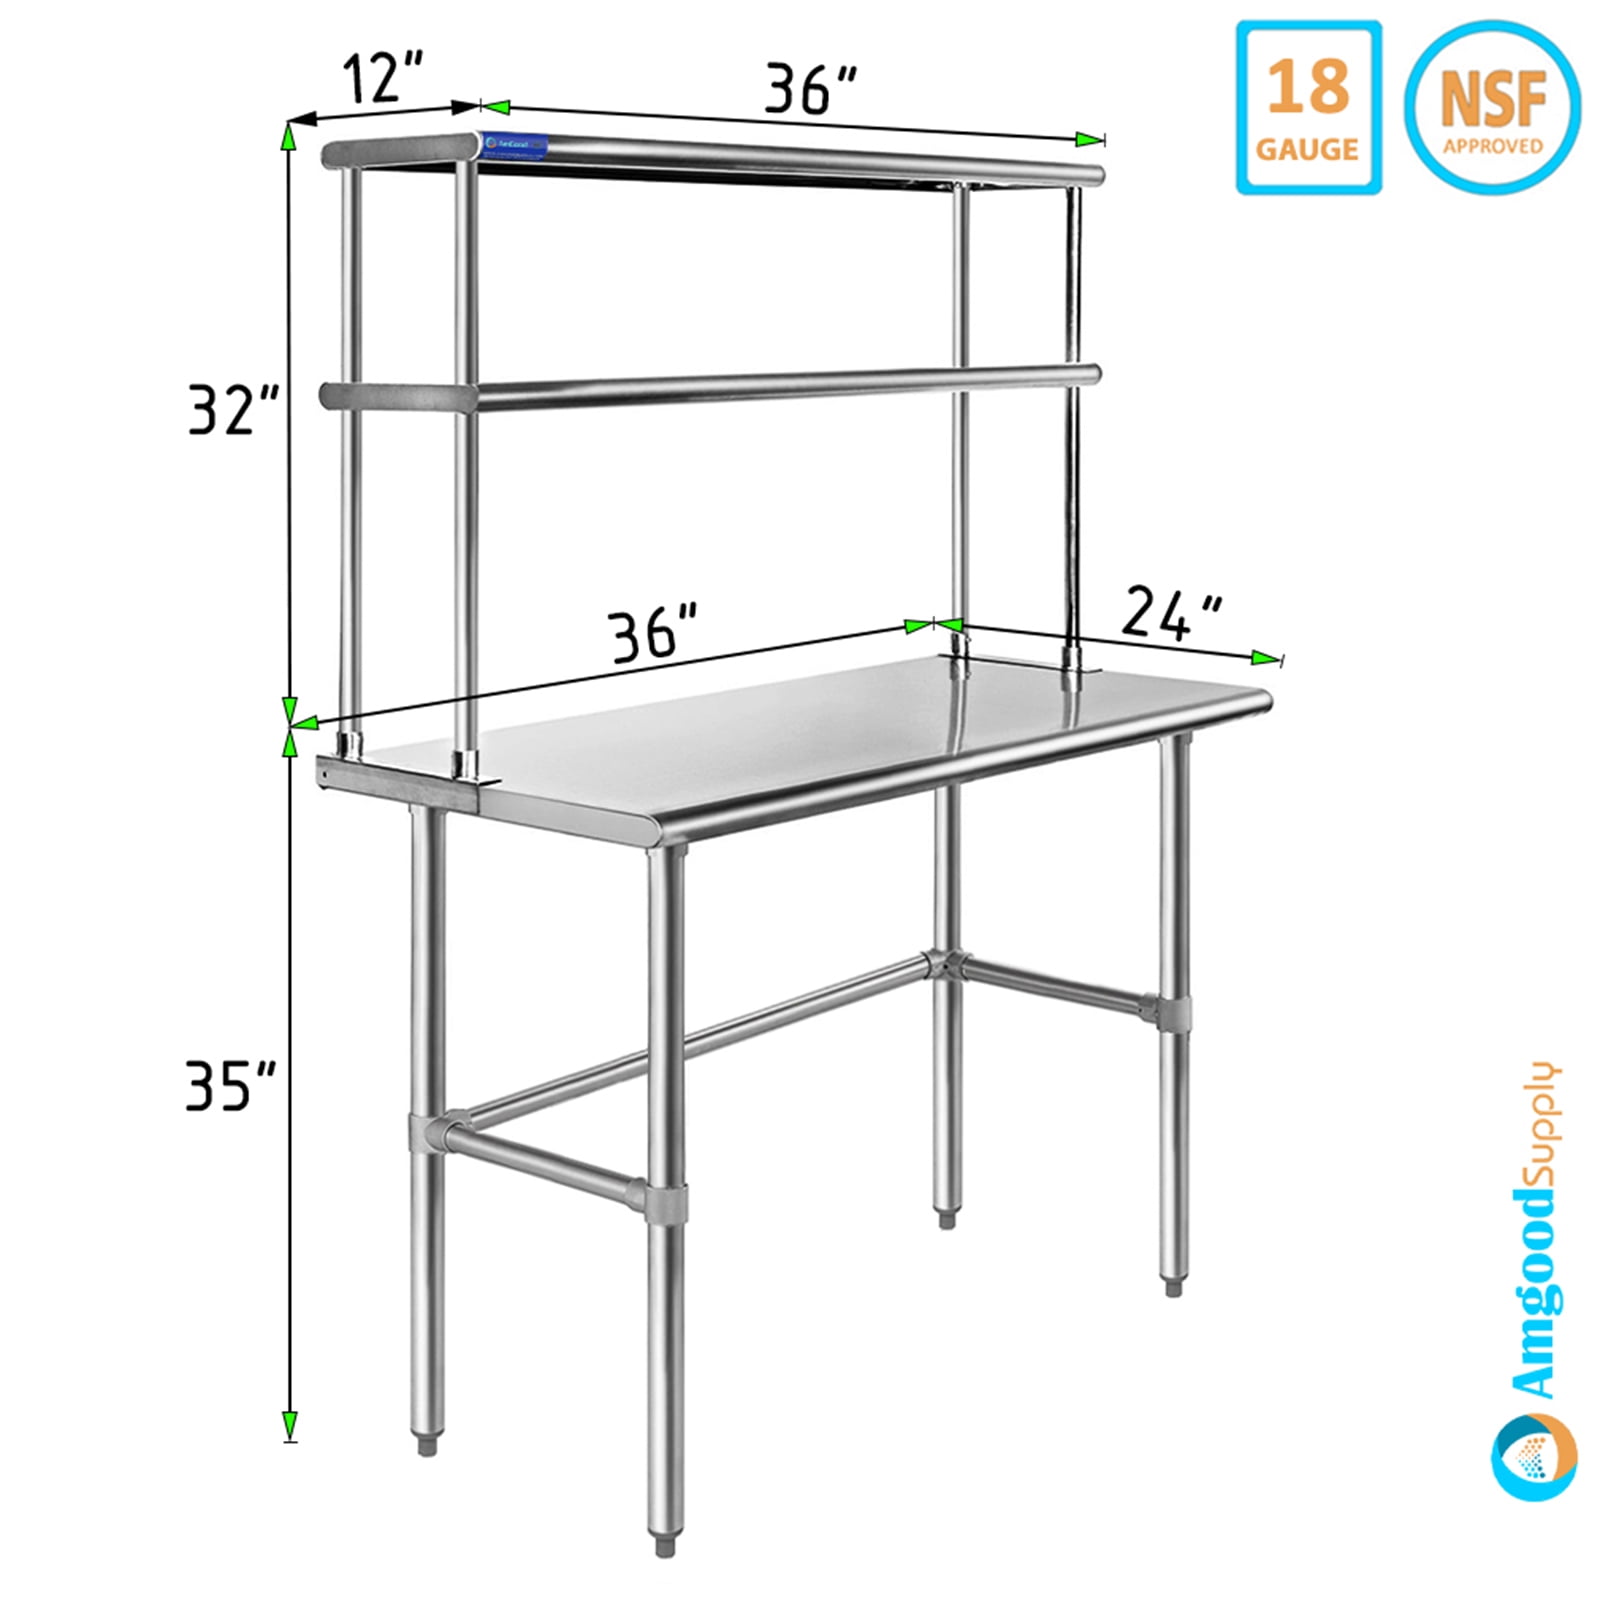 Stainless Steel Adjustable Double Overshelf for Work Table 14"x36" 